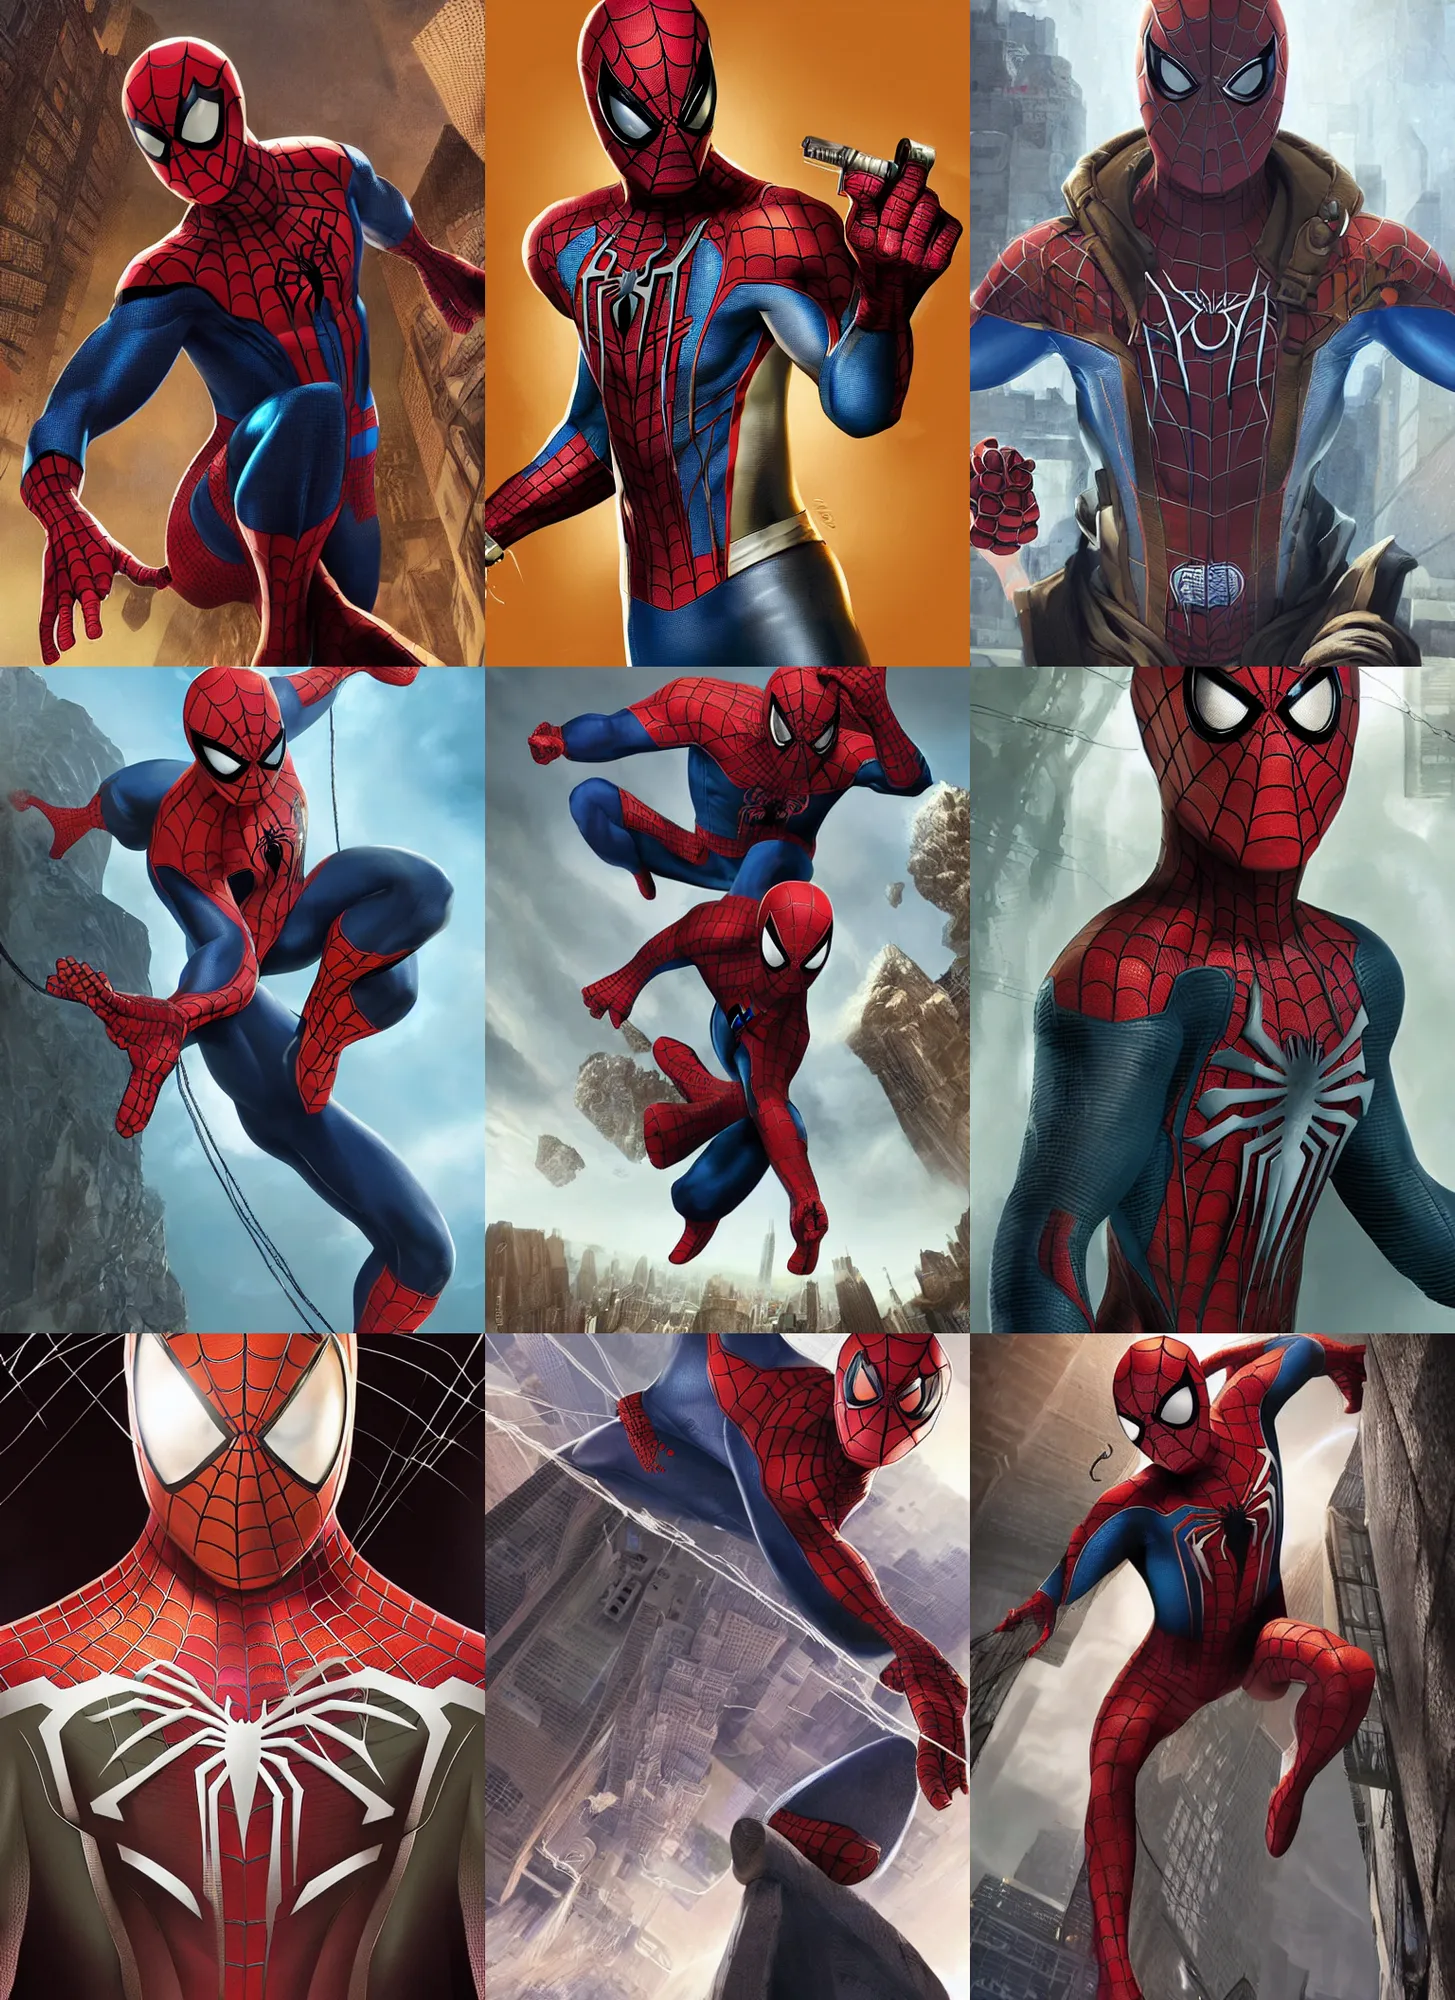 Prompt: Spiderman Apex Legends character digital illustration portrait design by, Mark Brooks and Brad Kunkle detailed, gorgeous lighting, wide angle action dynamic portrait